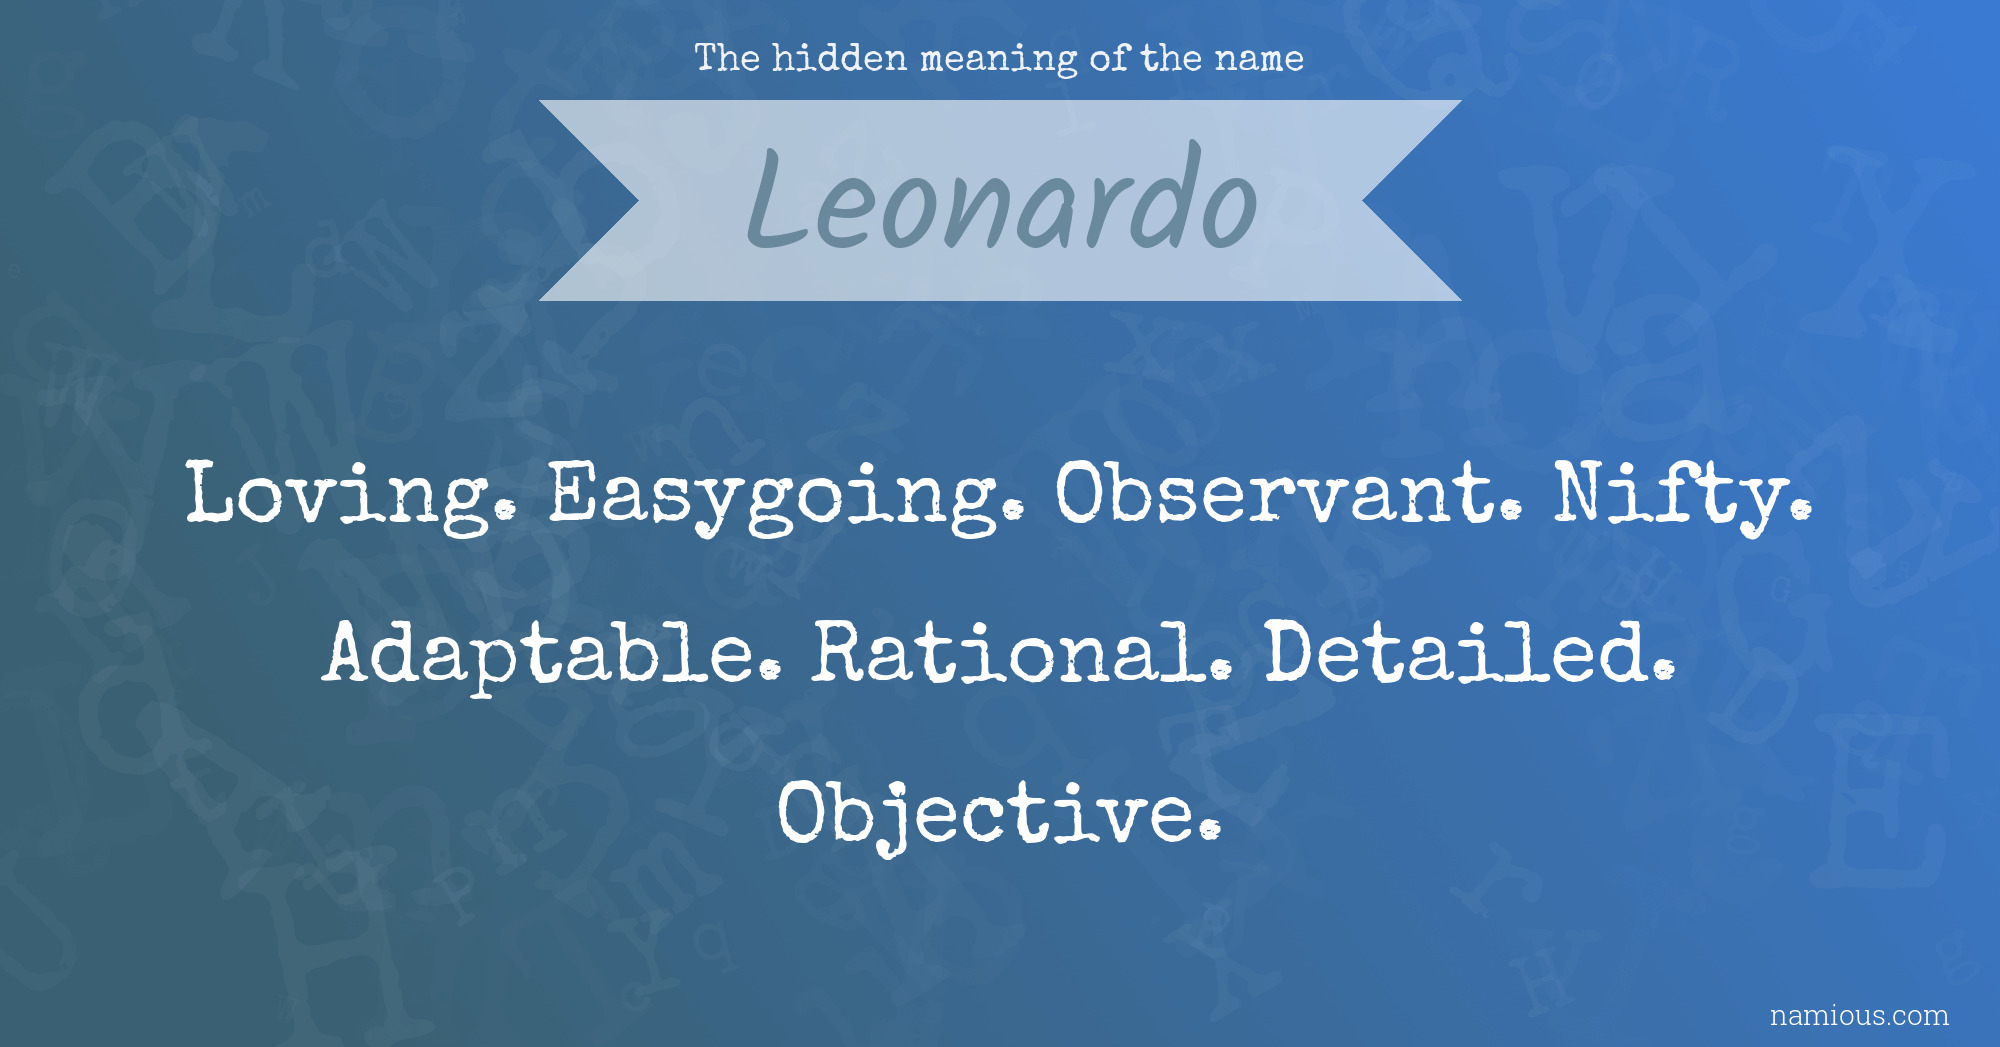 The hidden meaning of the name Leonardo